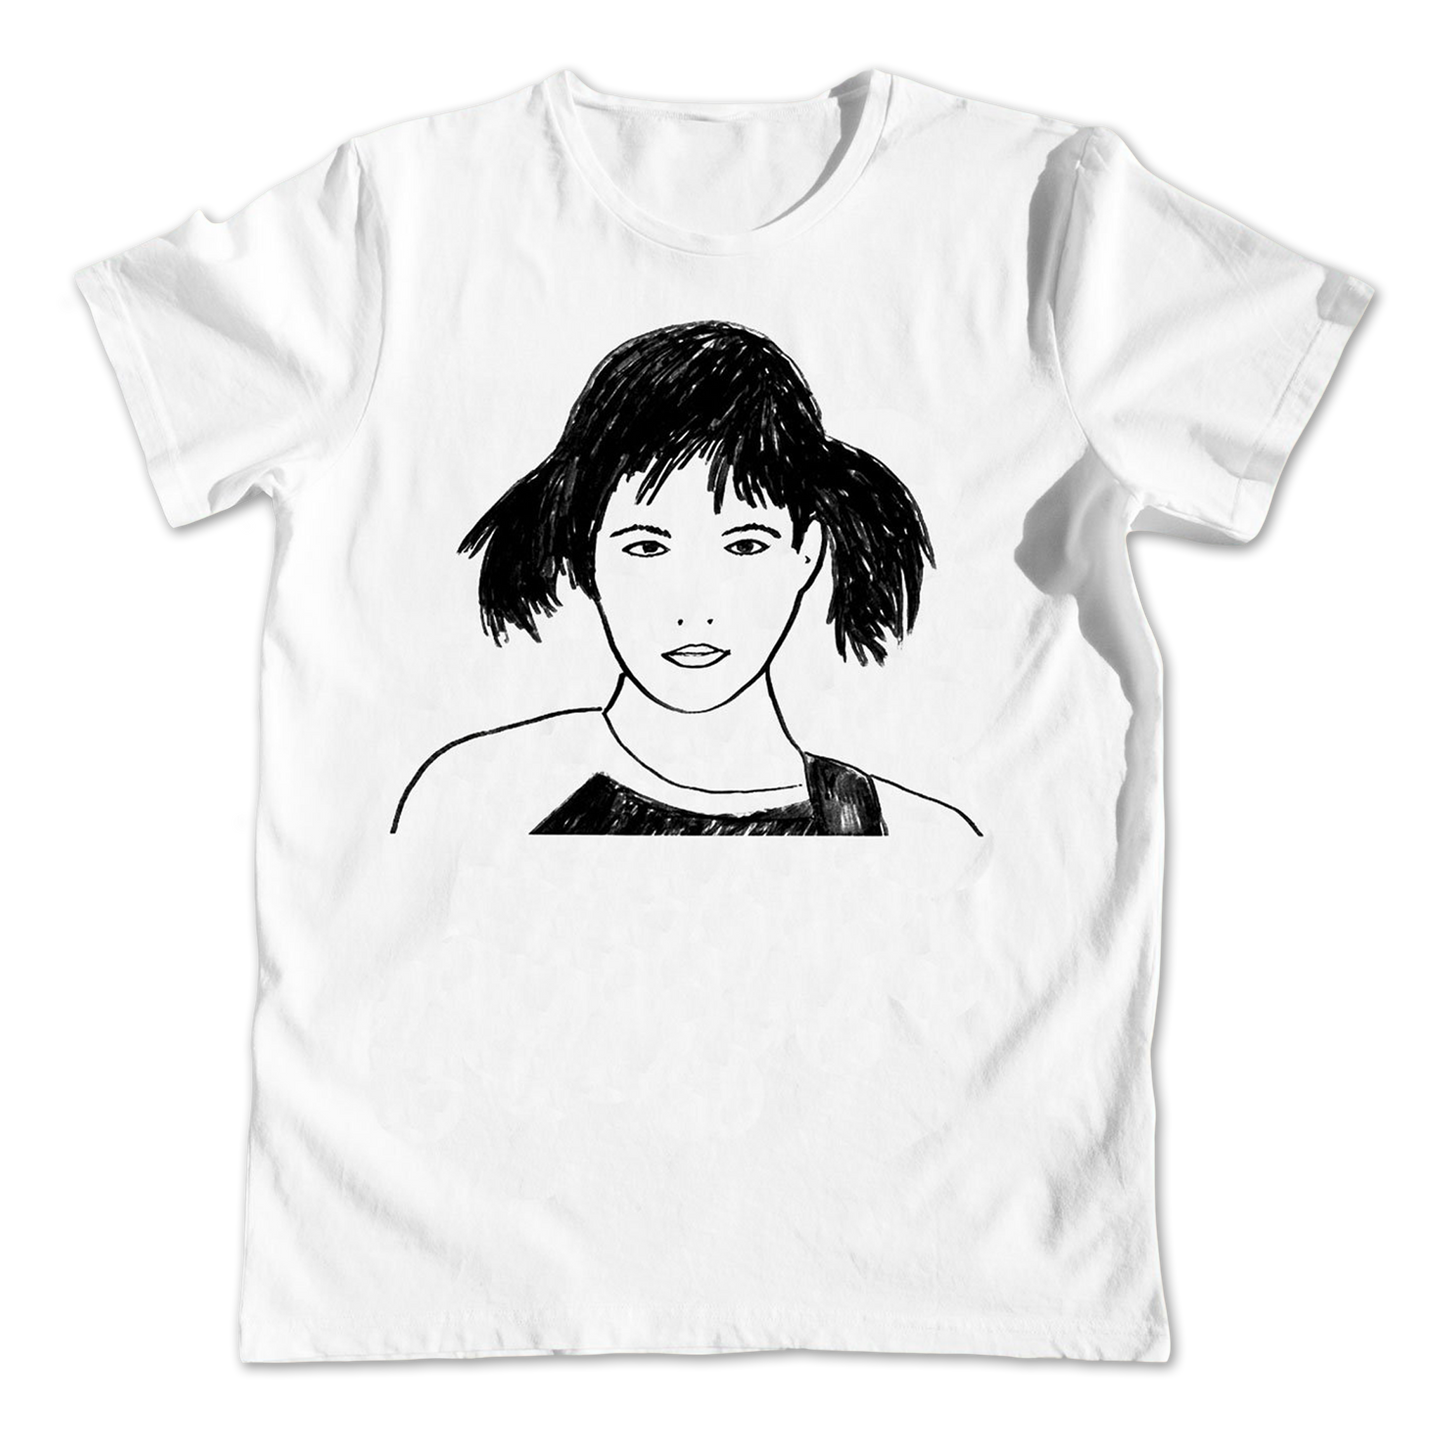 The Kathleen Hanna 2.0 T-shirt